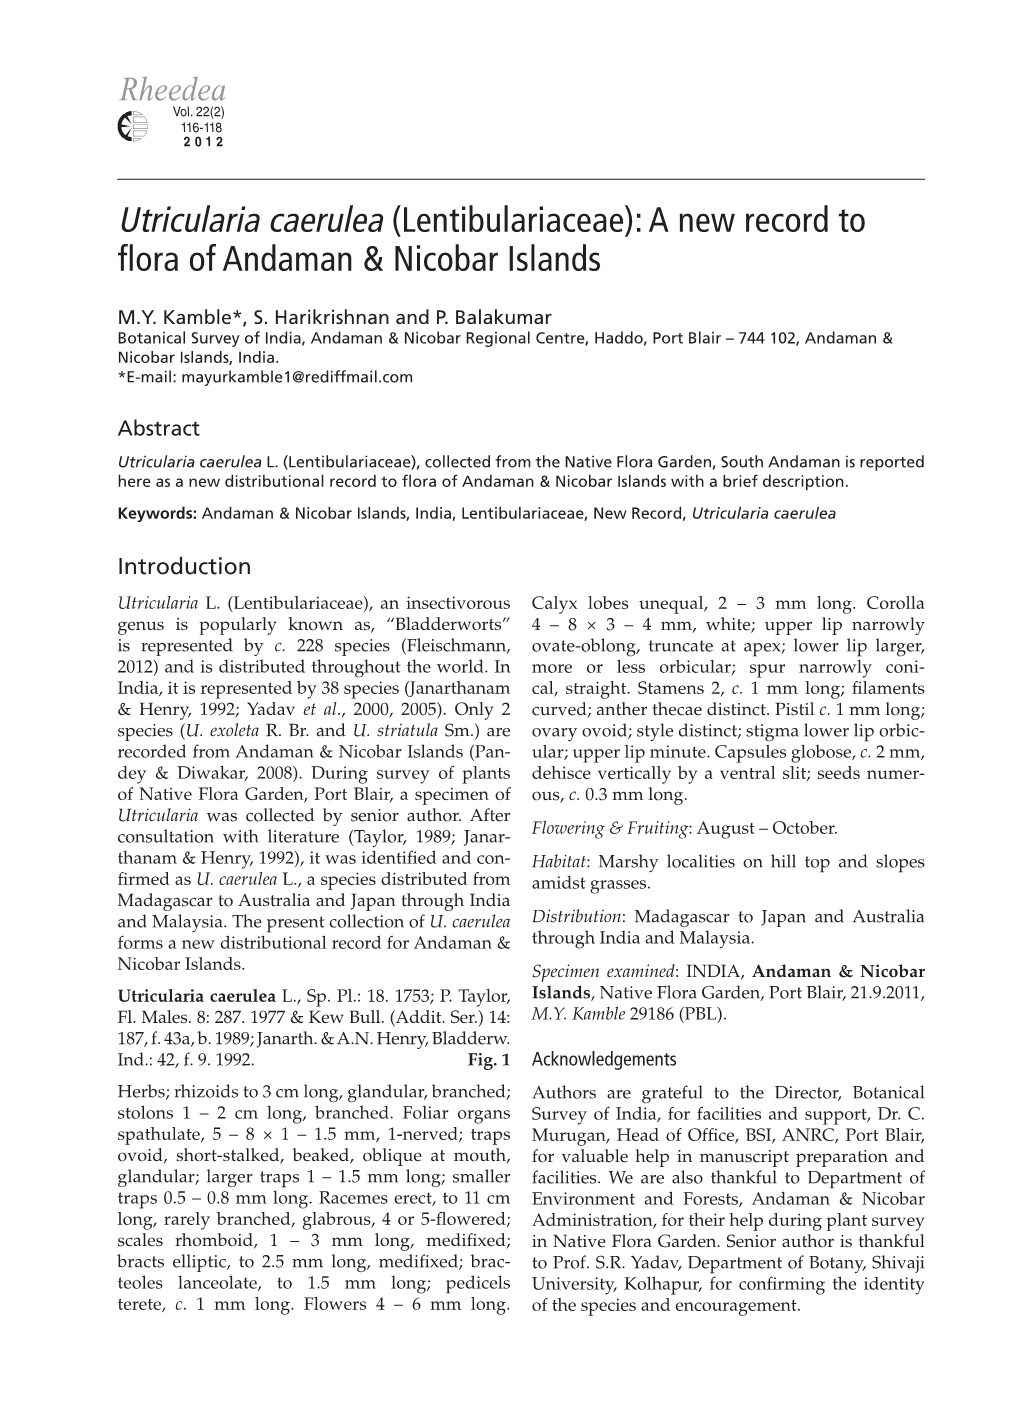 Utricularia Caerulea (Lentibulariaceae): a New Record to Flora of Andaman & Nicobar Islands